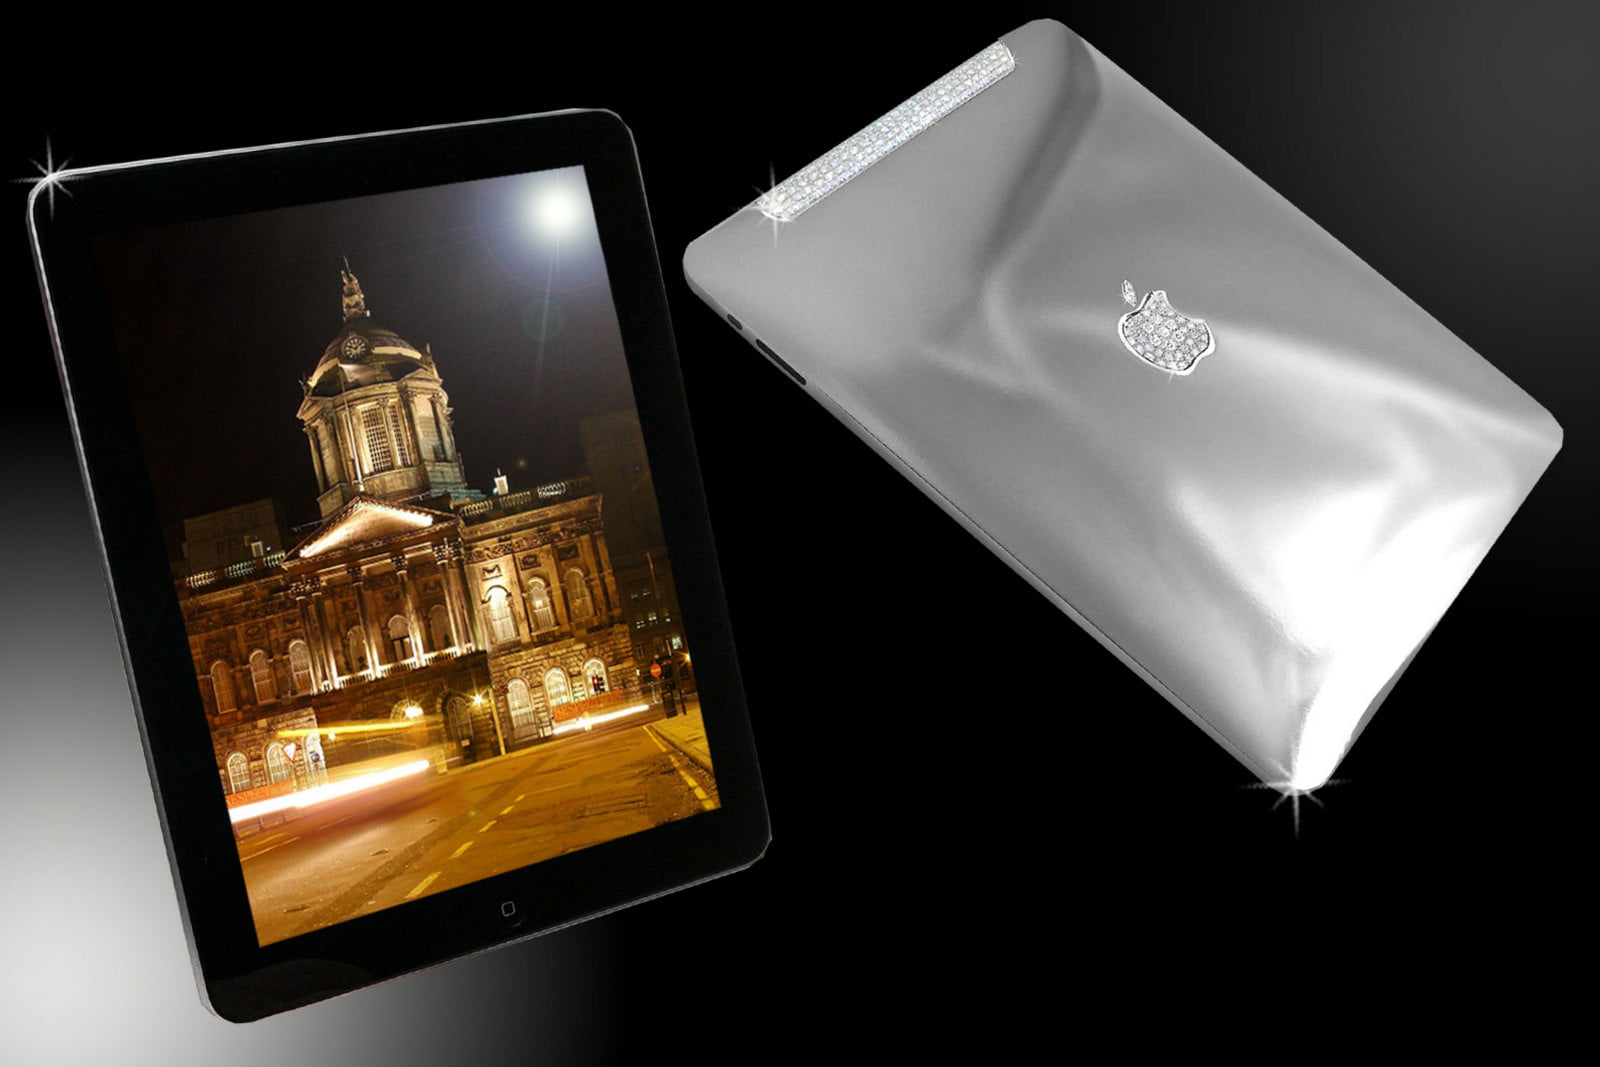  iPad Supreme Edition | Laptop News